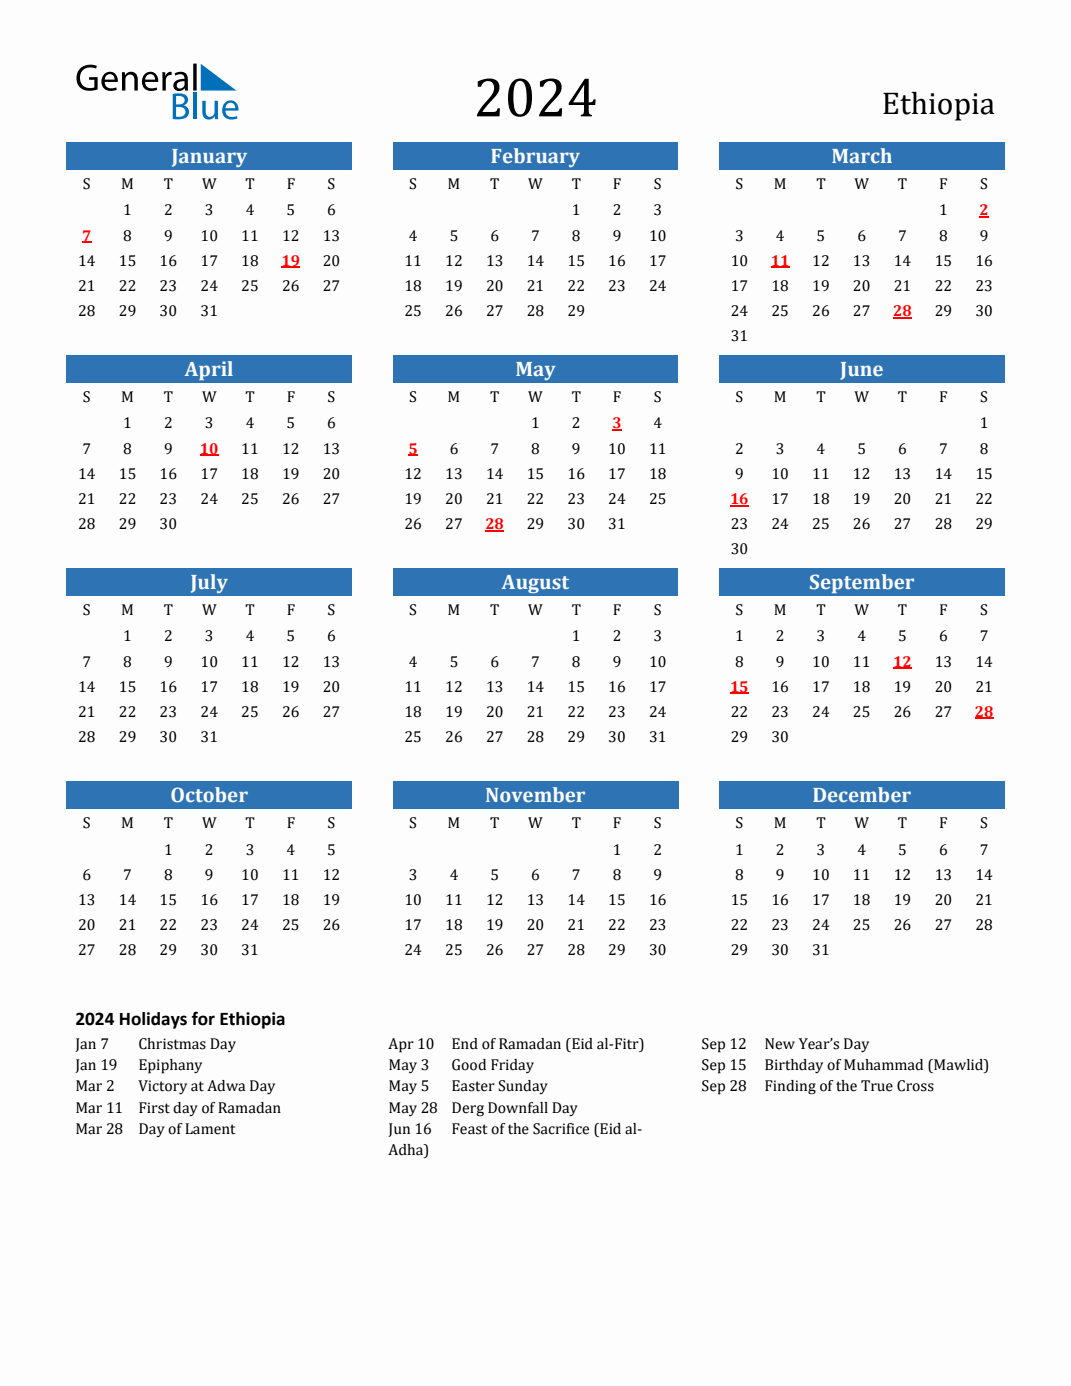 greek orthodox fasting calendar 2024 37